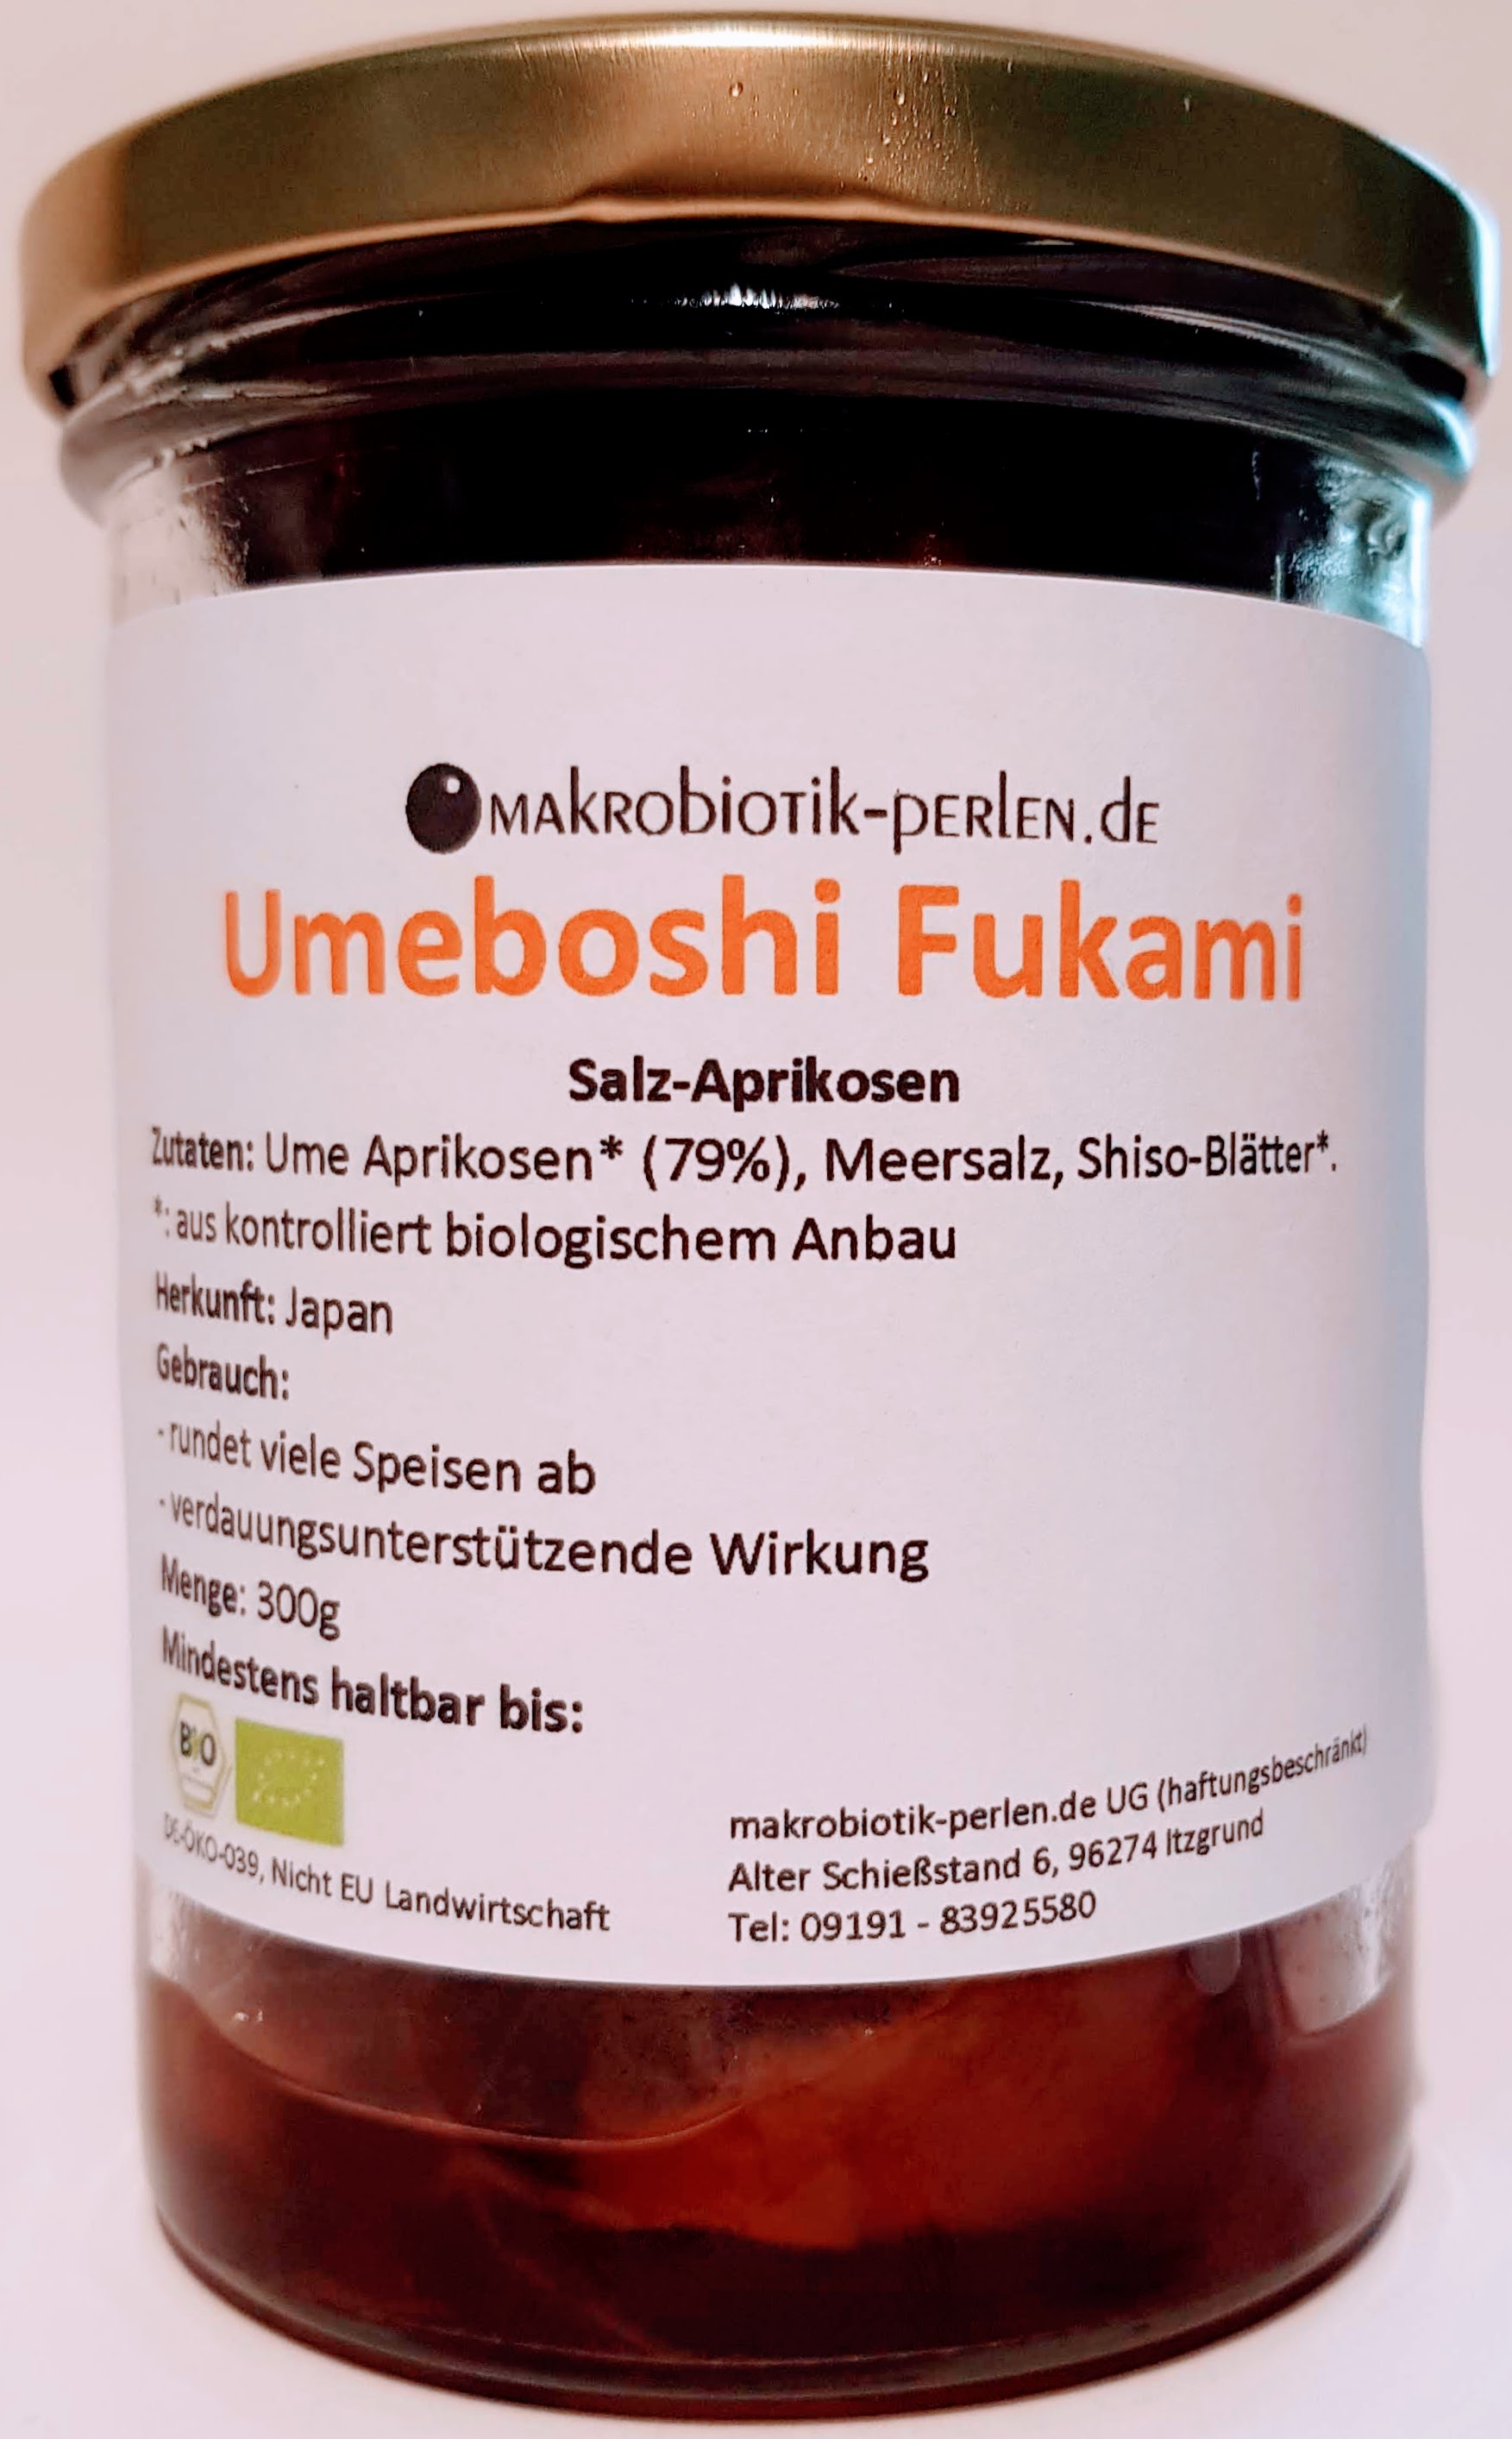 Umeboshi Fukami (Salz-Aprikosen)